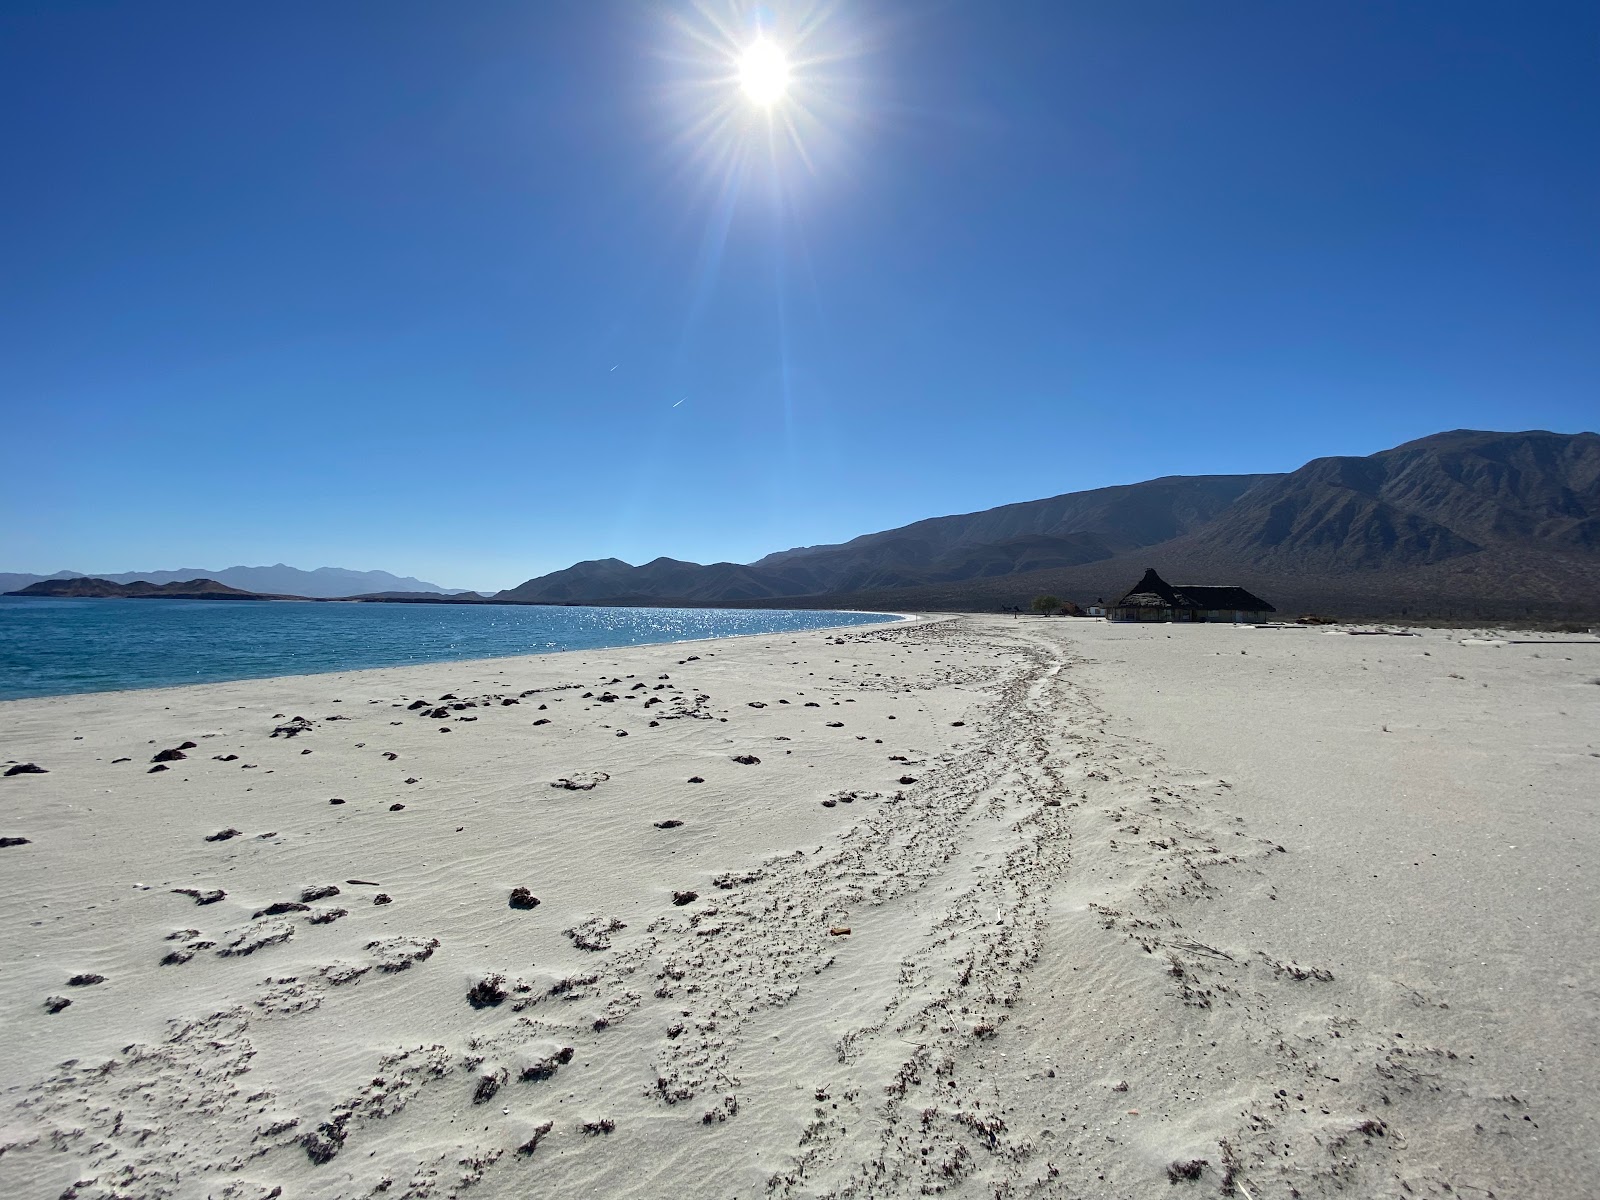 Valokuva Playa El Pescadorista. pinnalla kirkas hieno hiekka:n kanssa